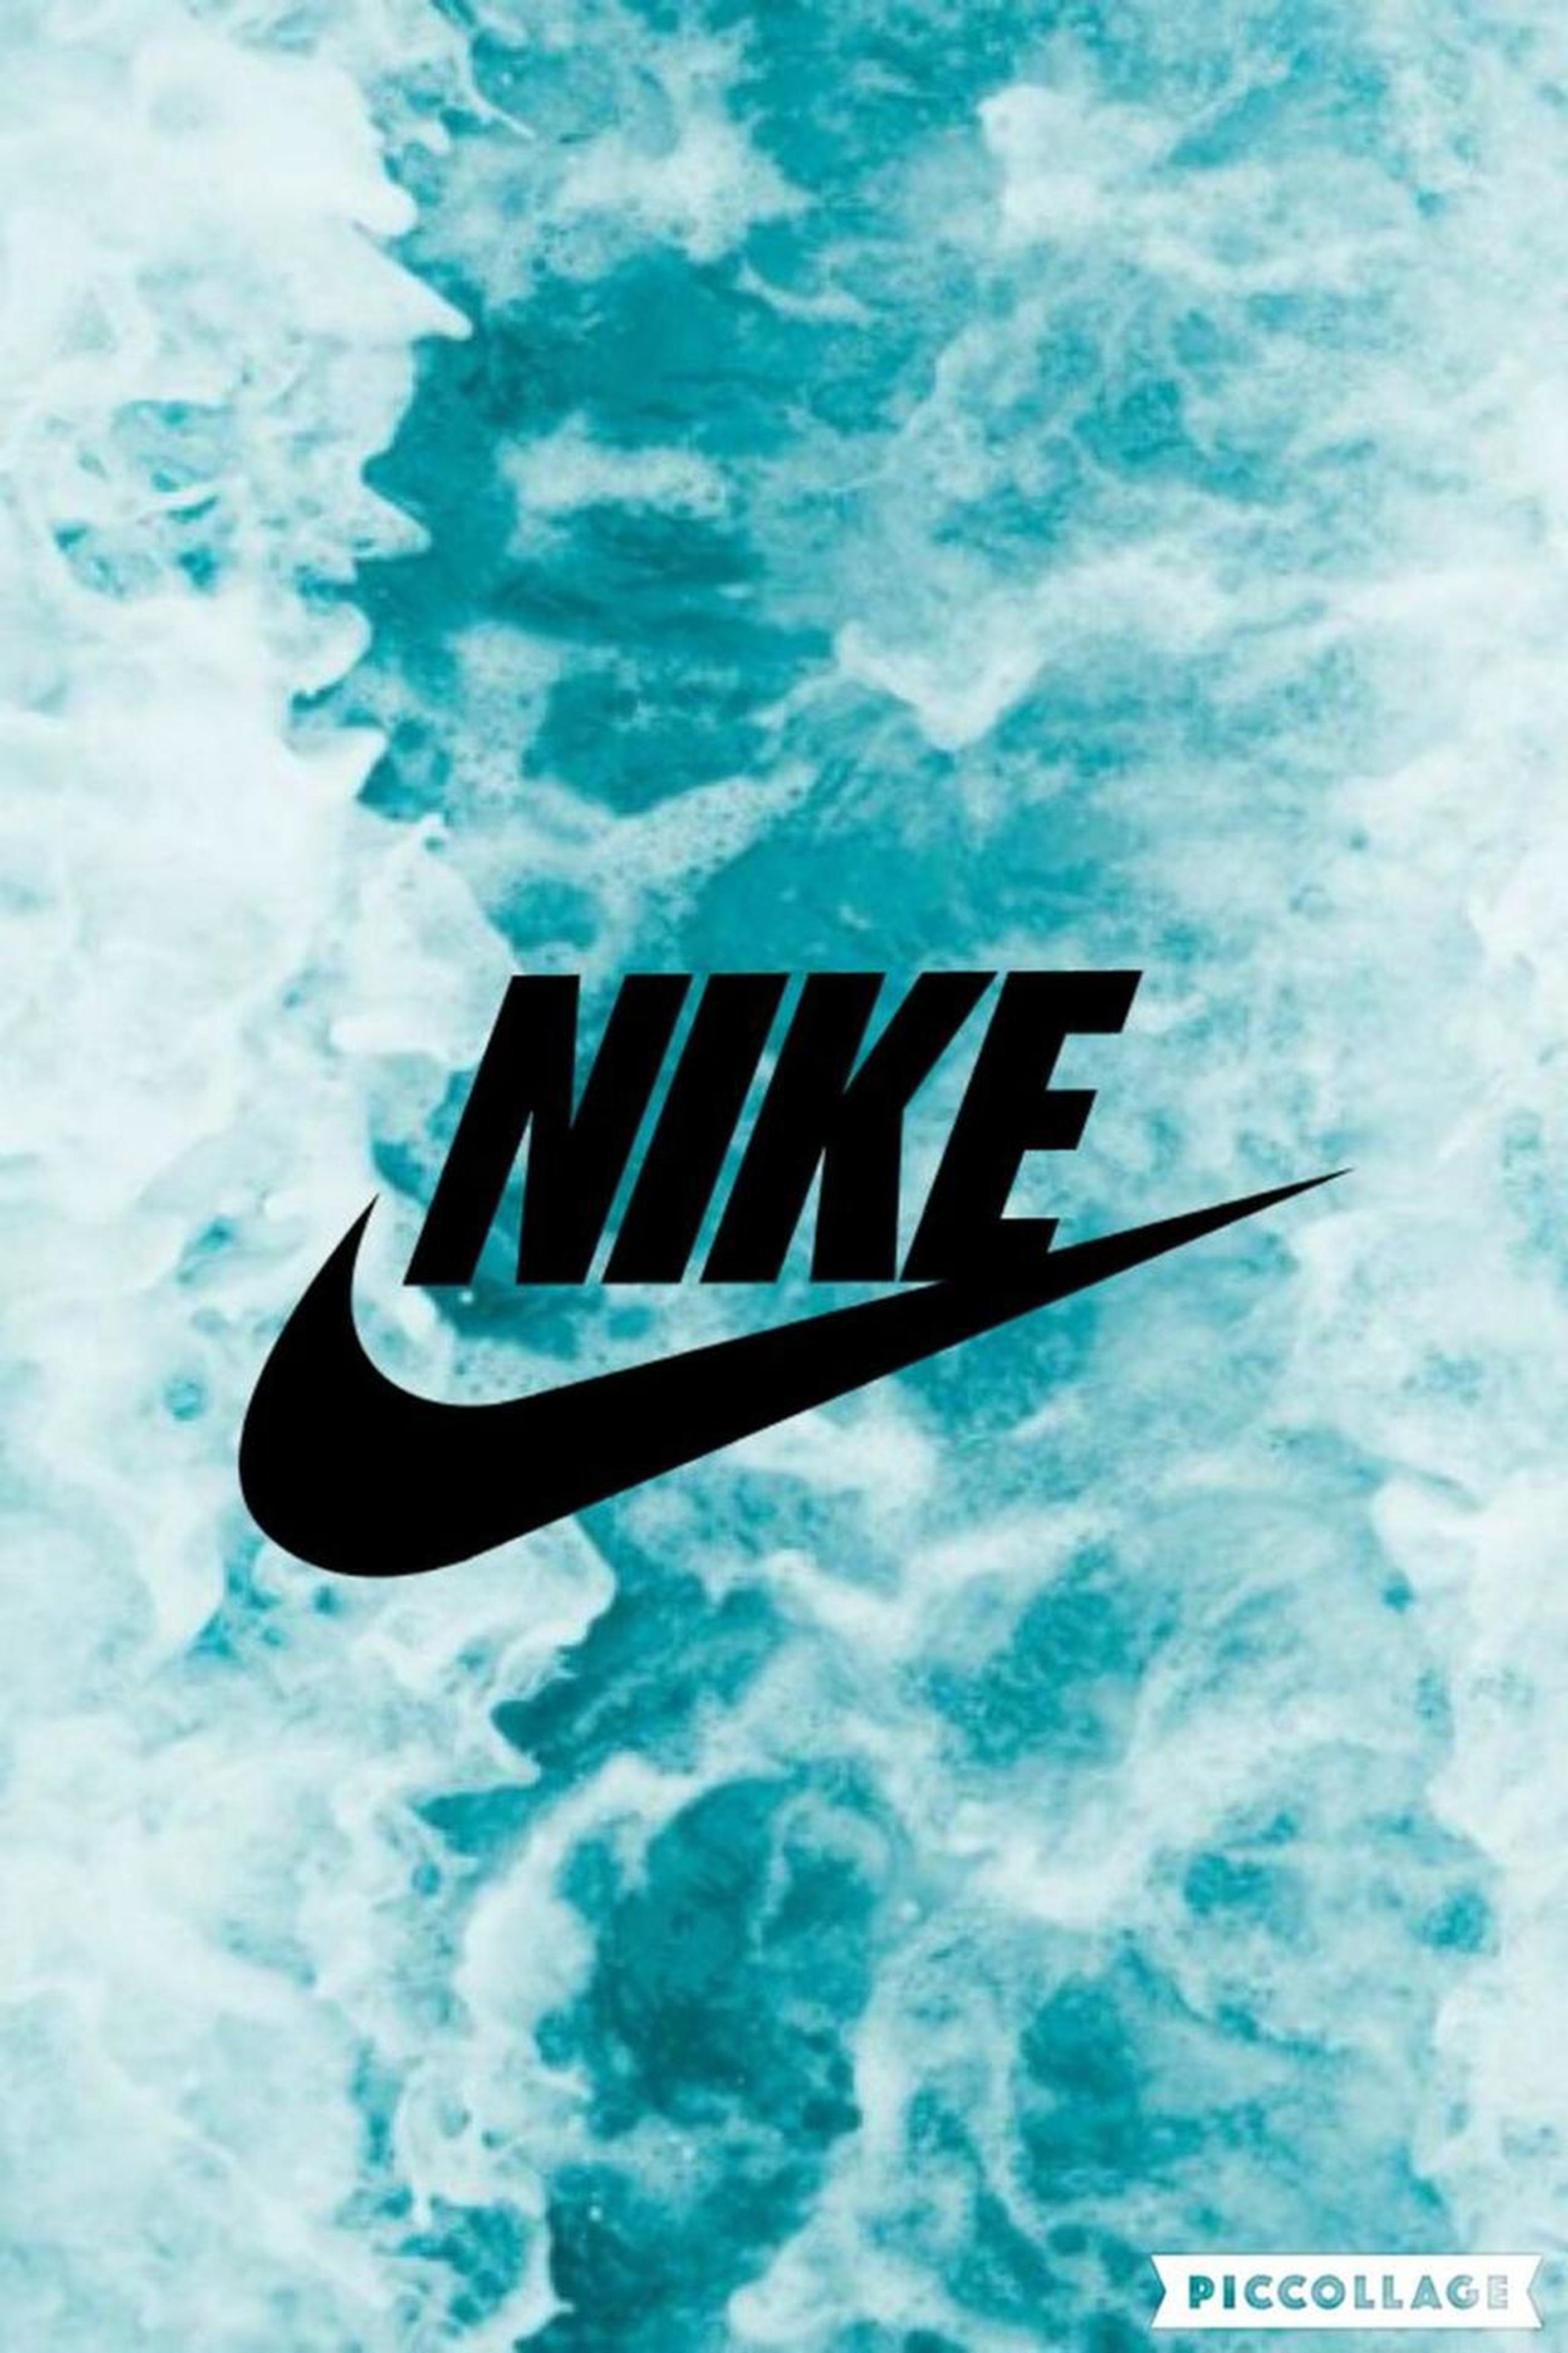 Nike Teal Marble iPhone Wallpaper